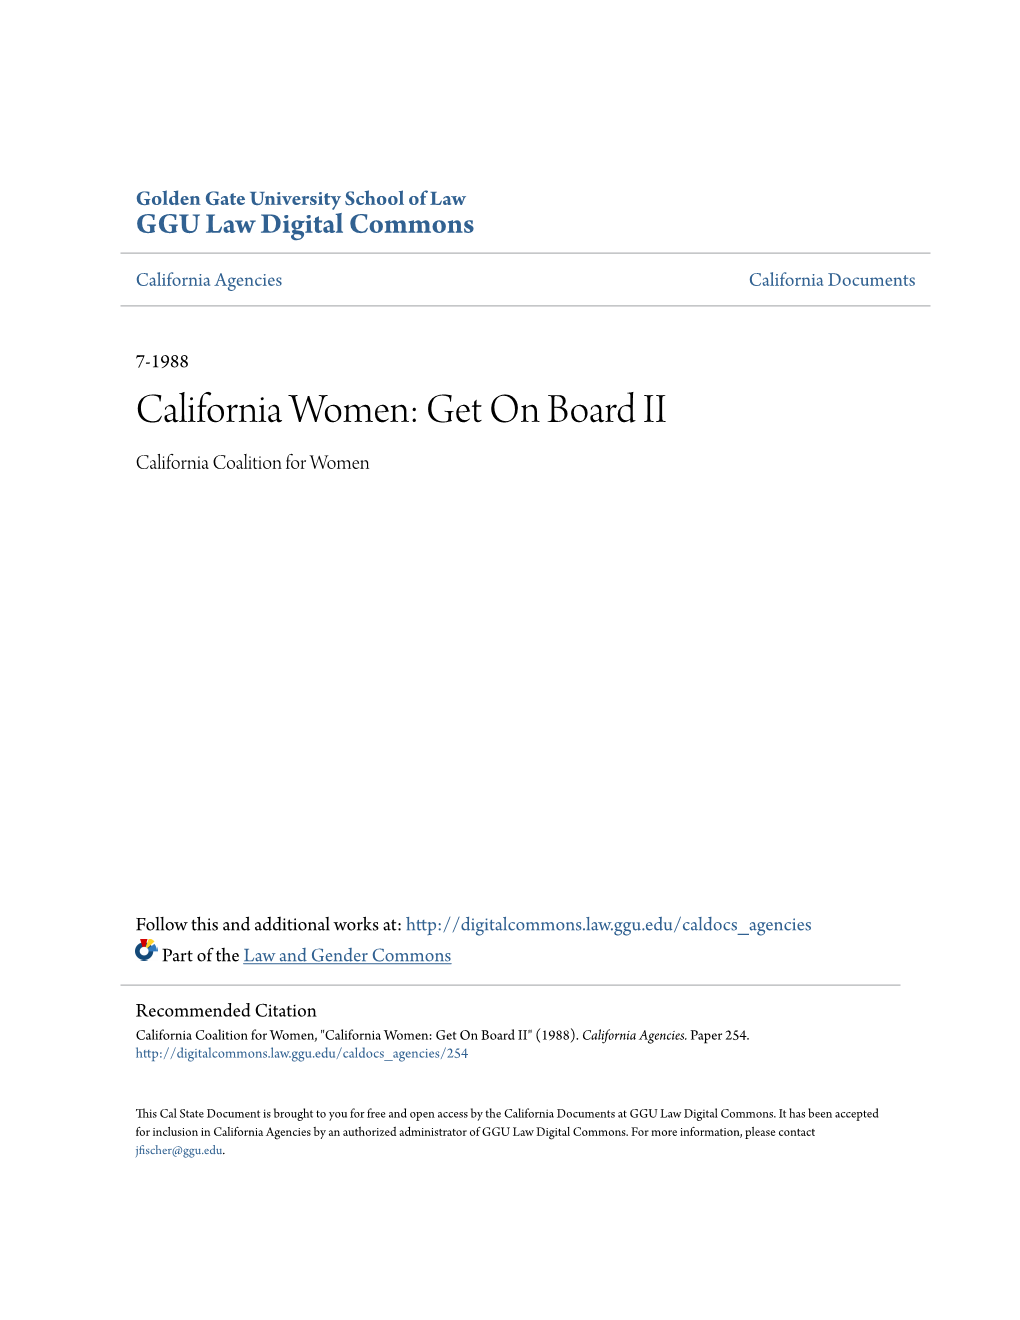 California Women: Get on Board II California Coalition for Women